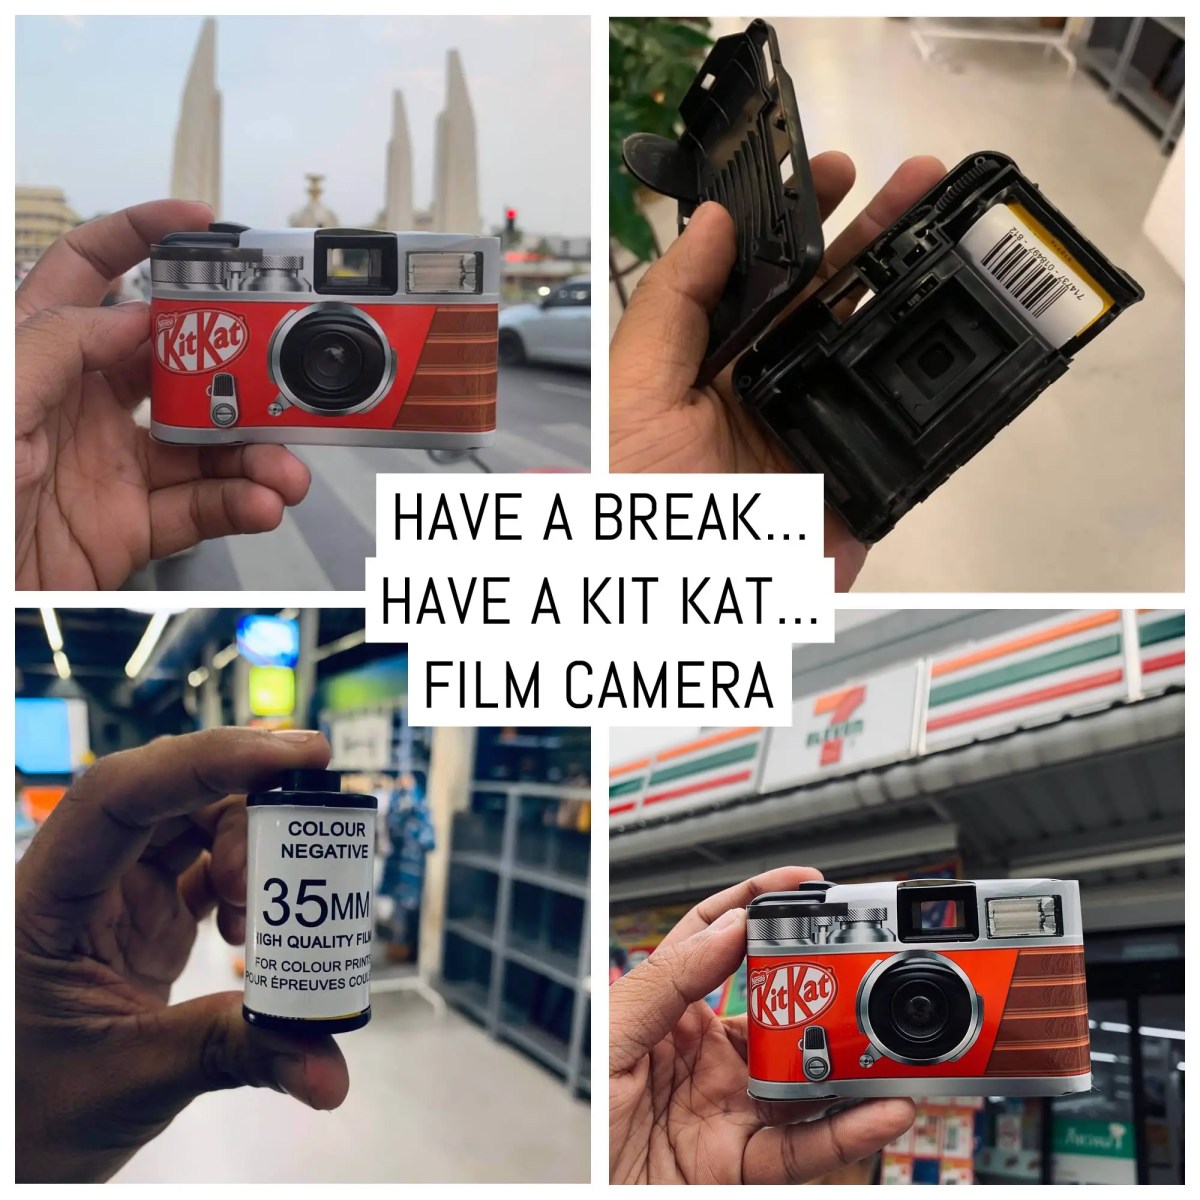 Have a break have a Kit Kat film camera